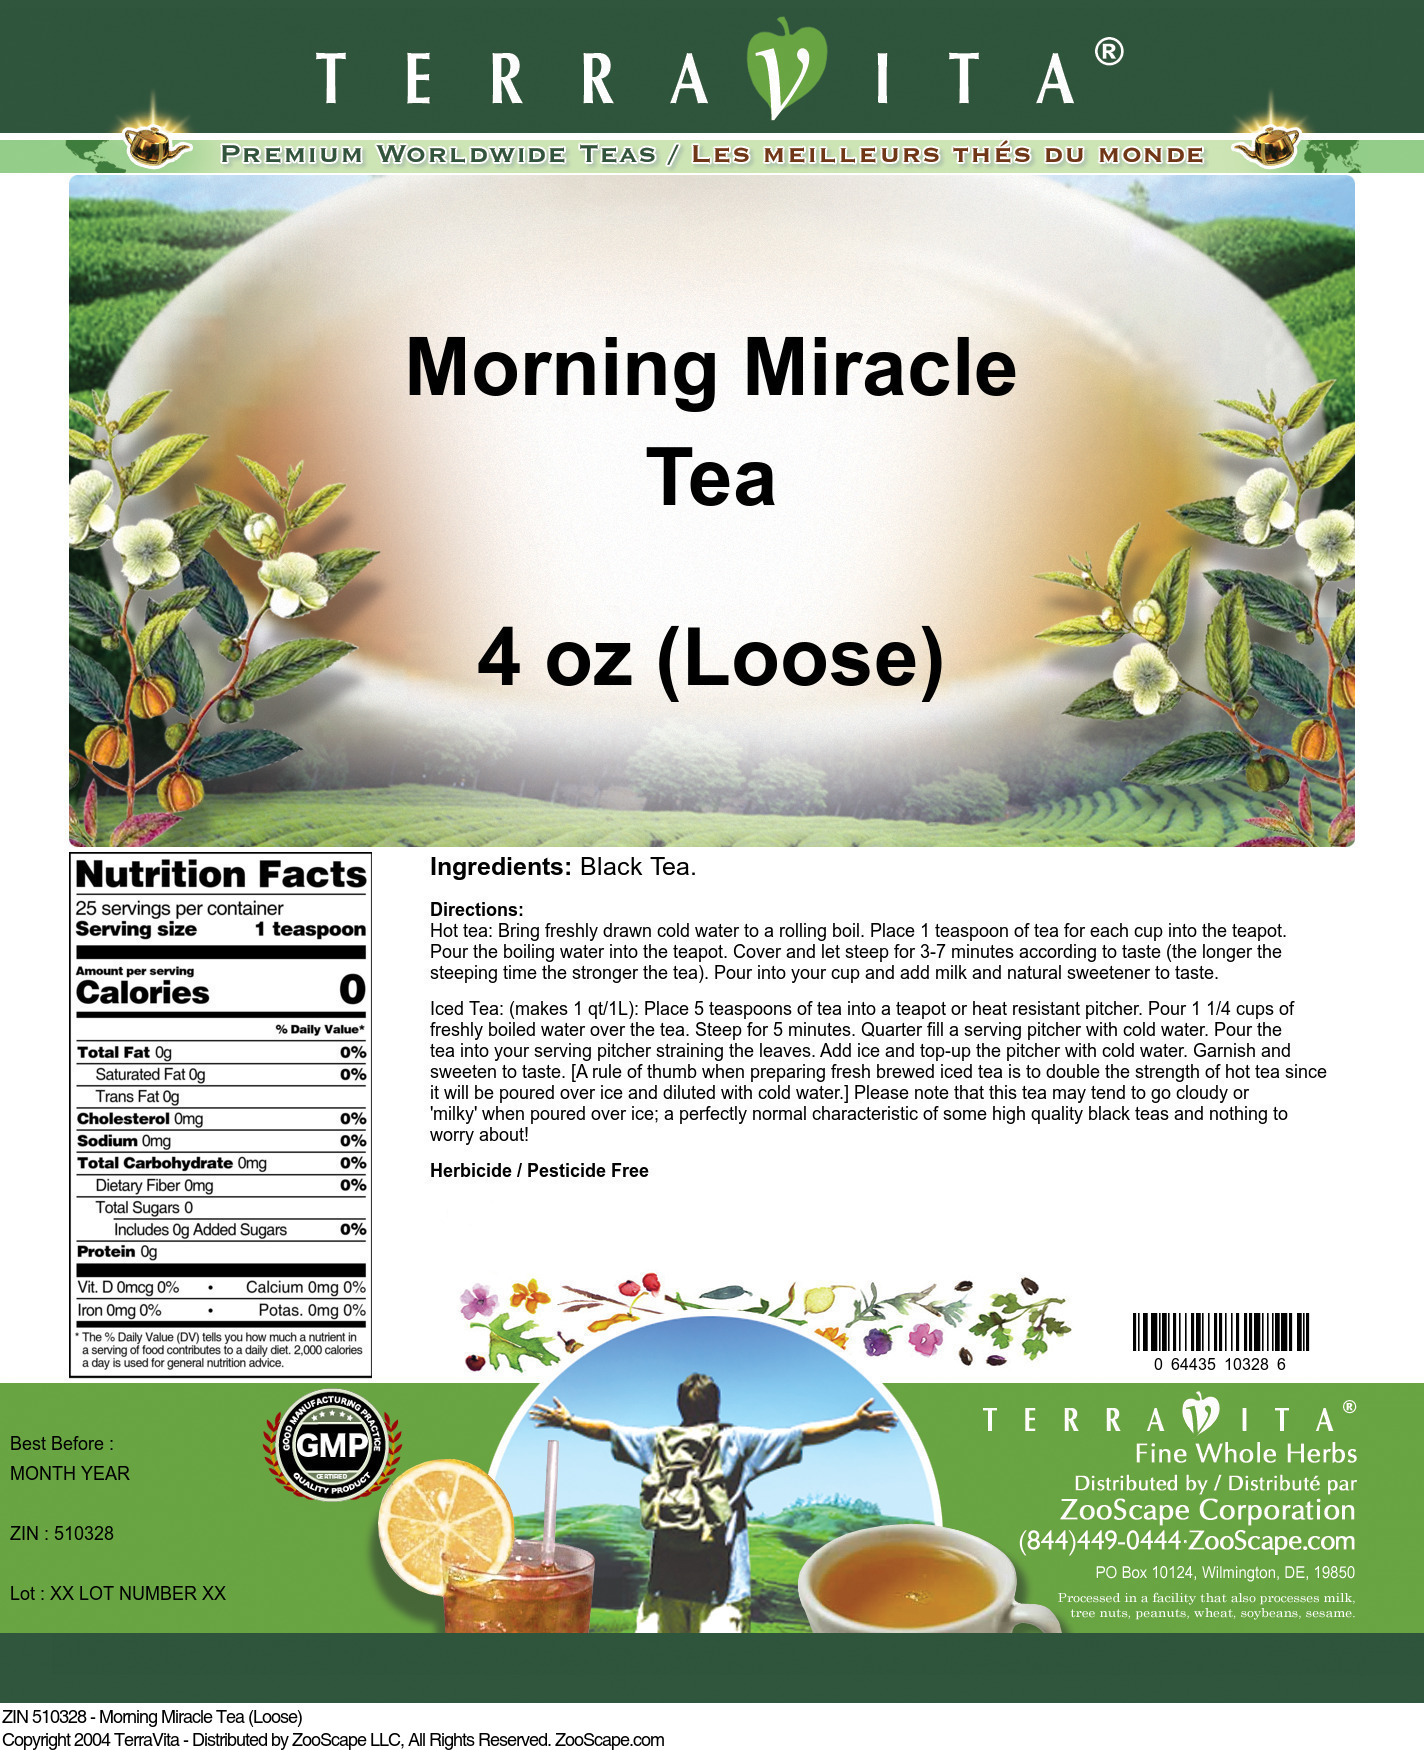 Morning Miracle Tea (Loose) - Label